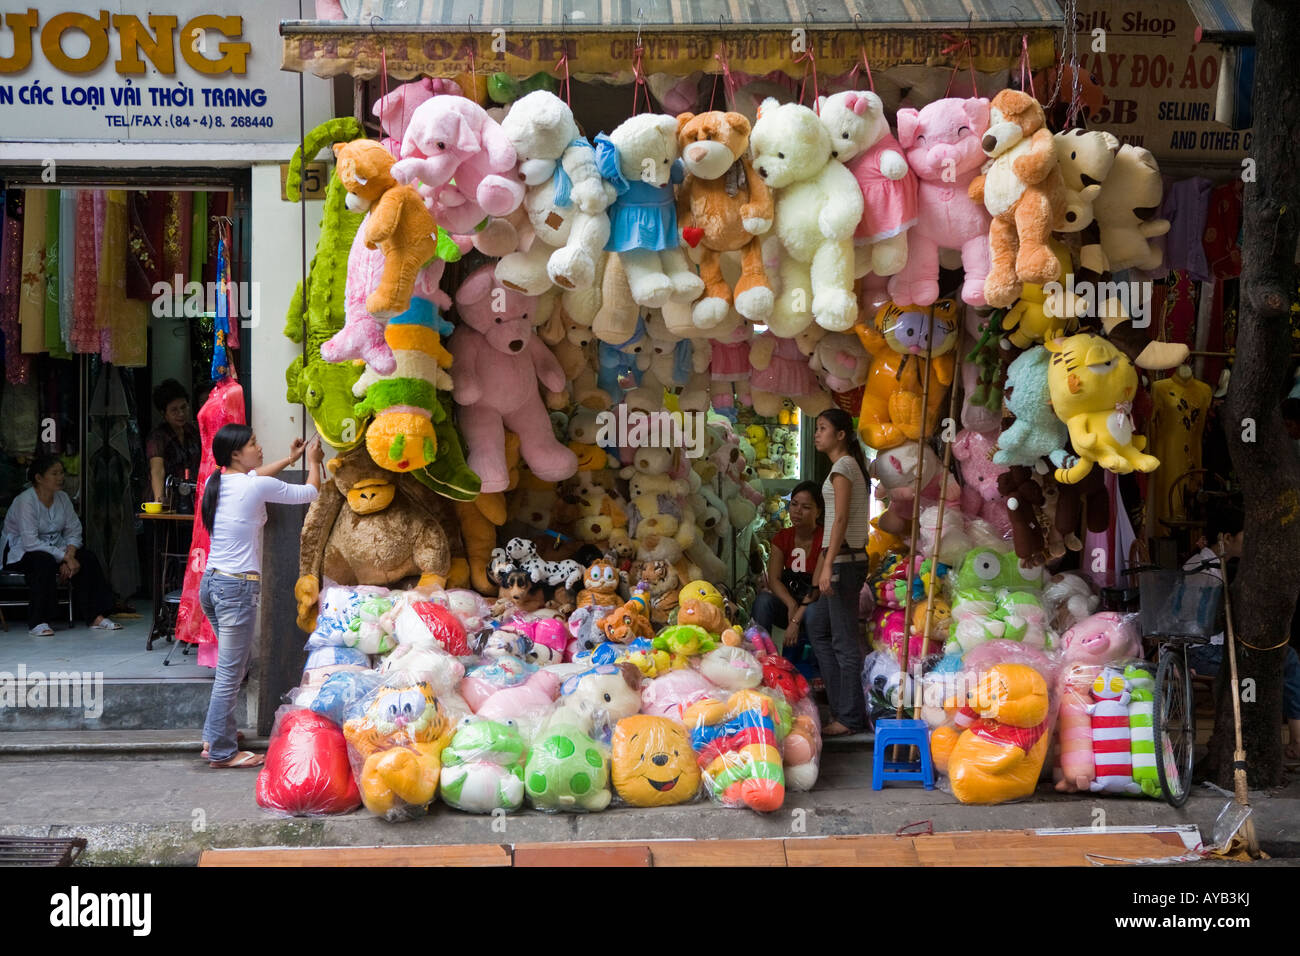 stuffed animal store in Hanoi Stock Photo - Alamy